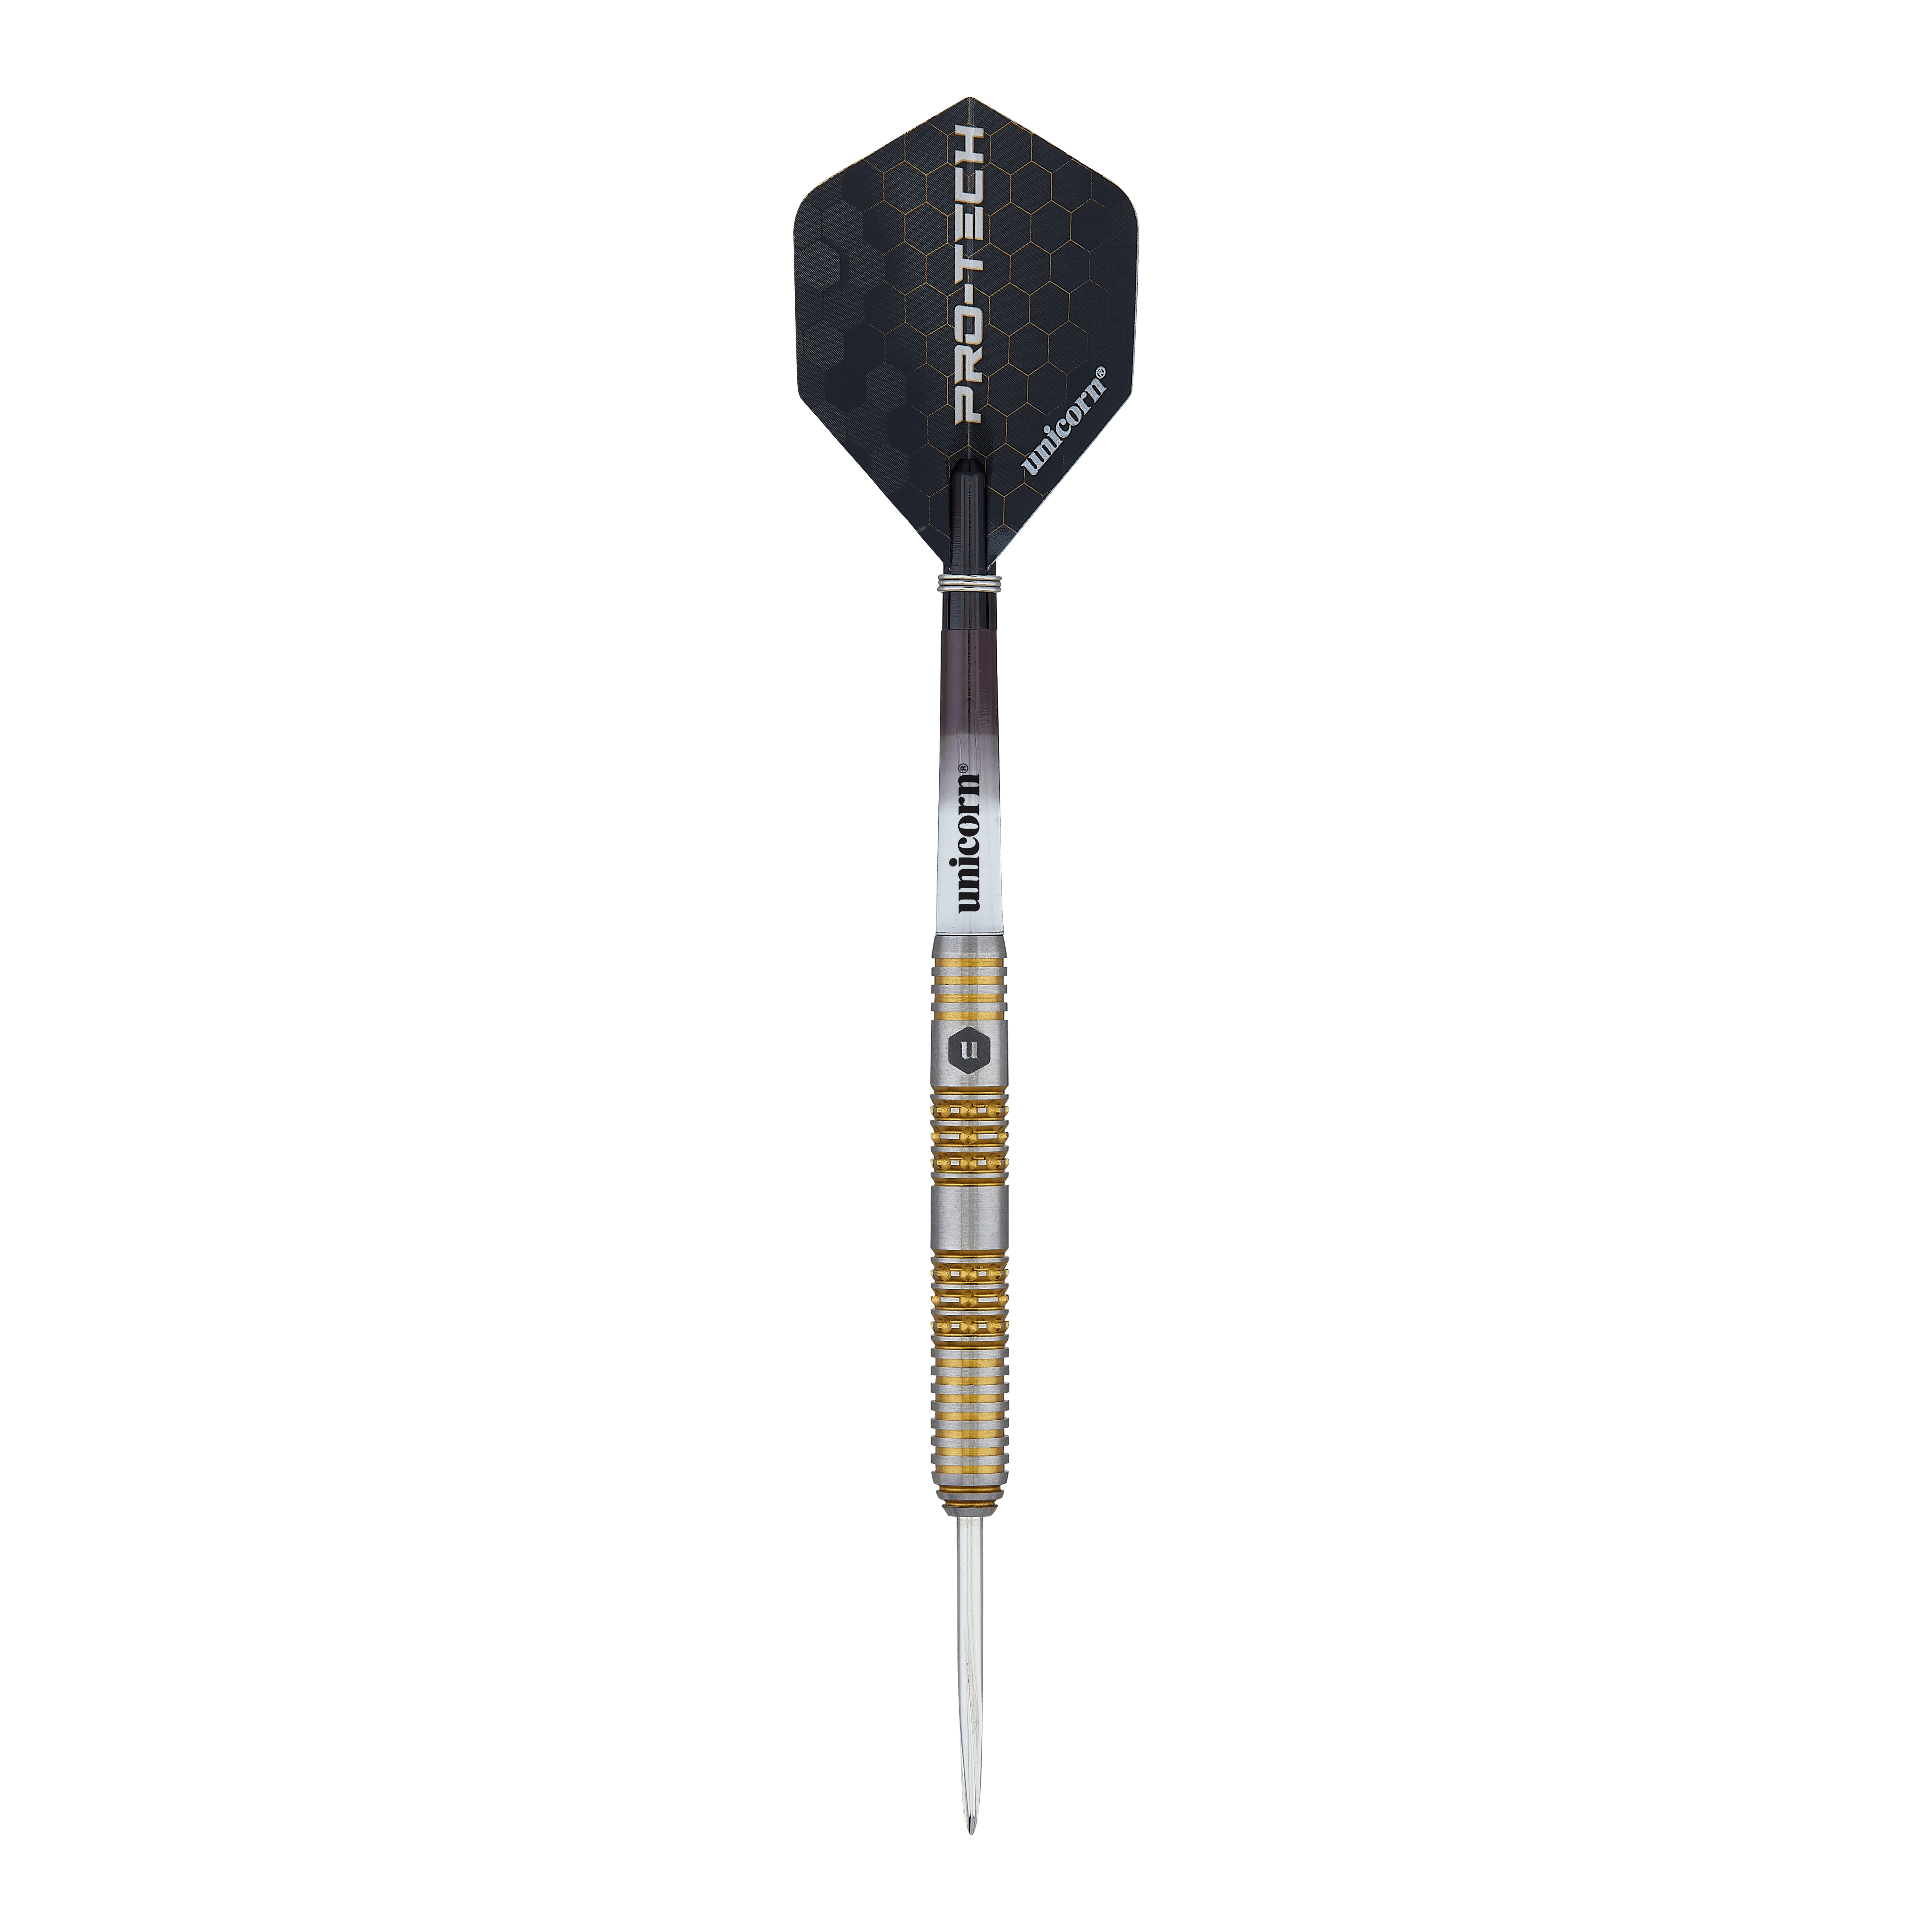 Unicorn Pro-Tech Style 6 stalen darts - 23 g